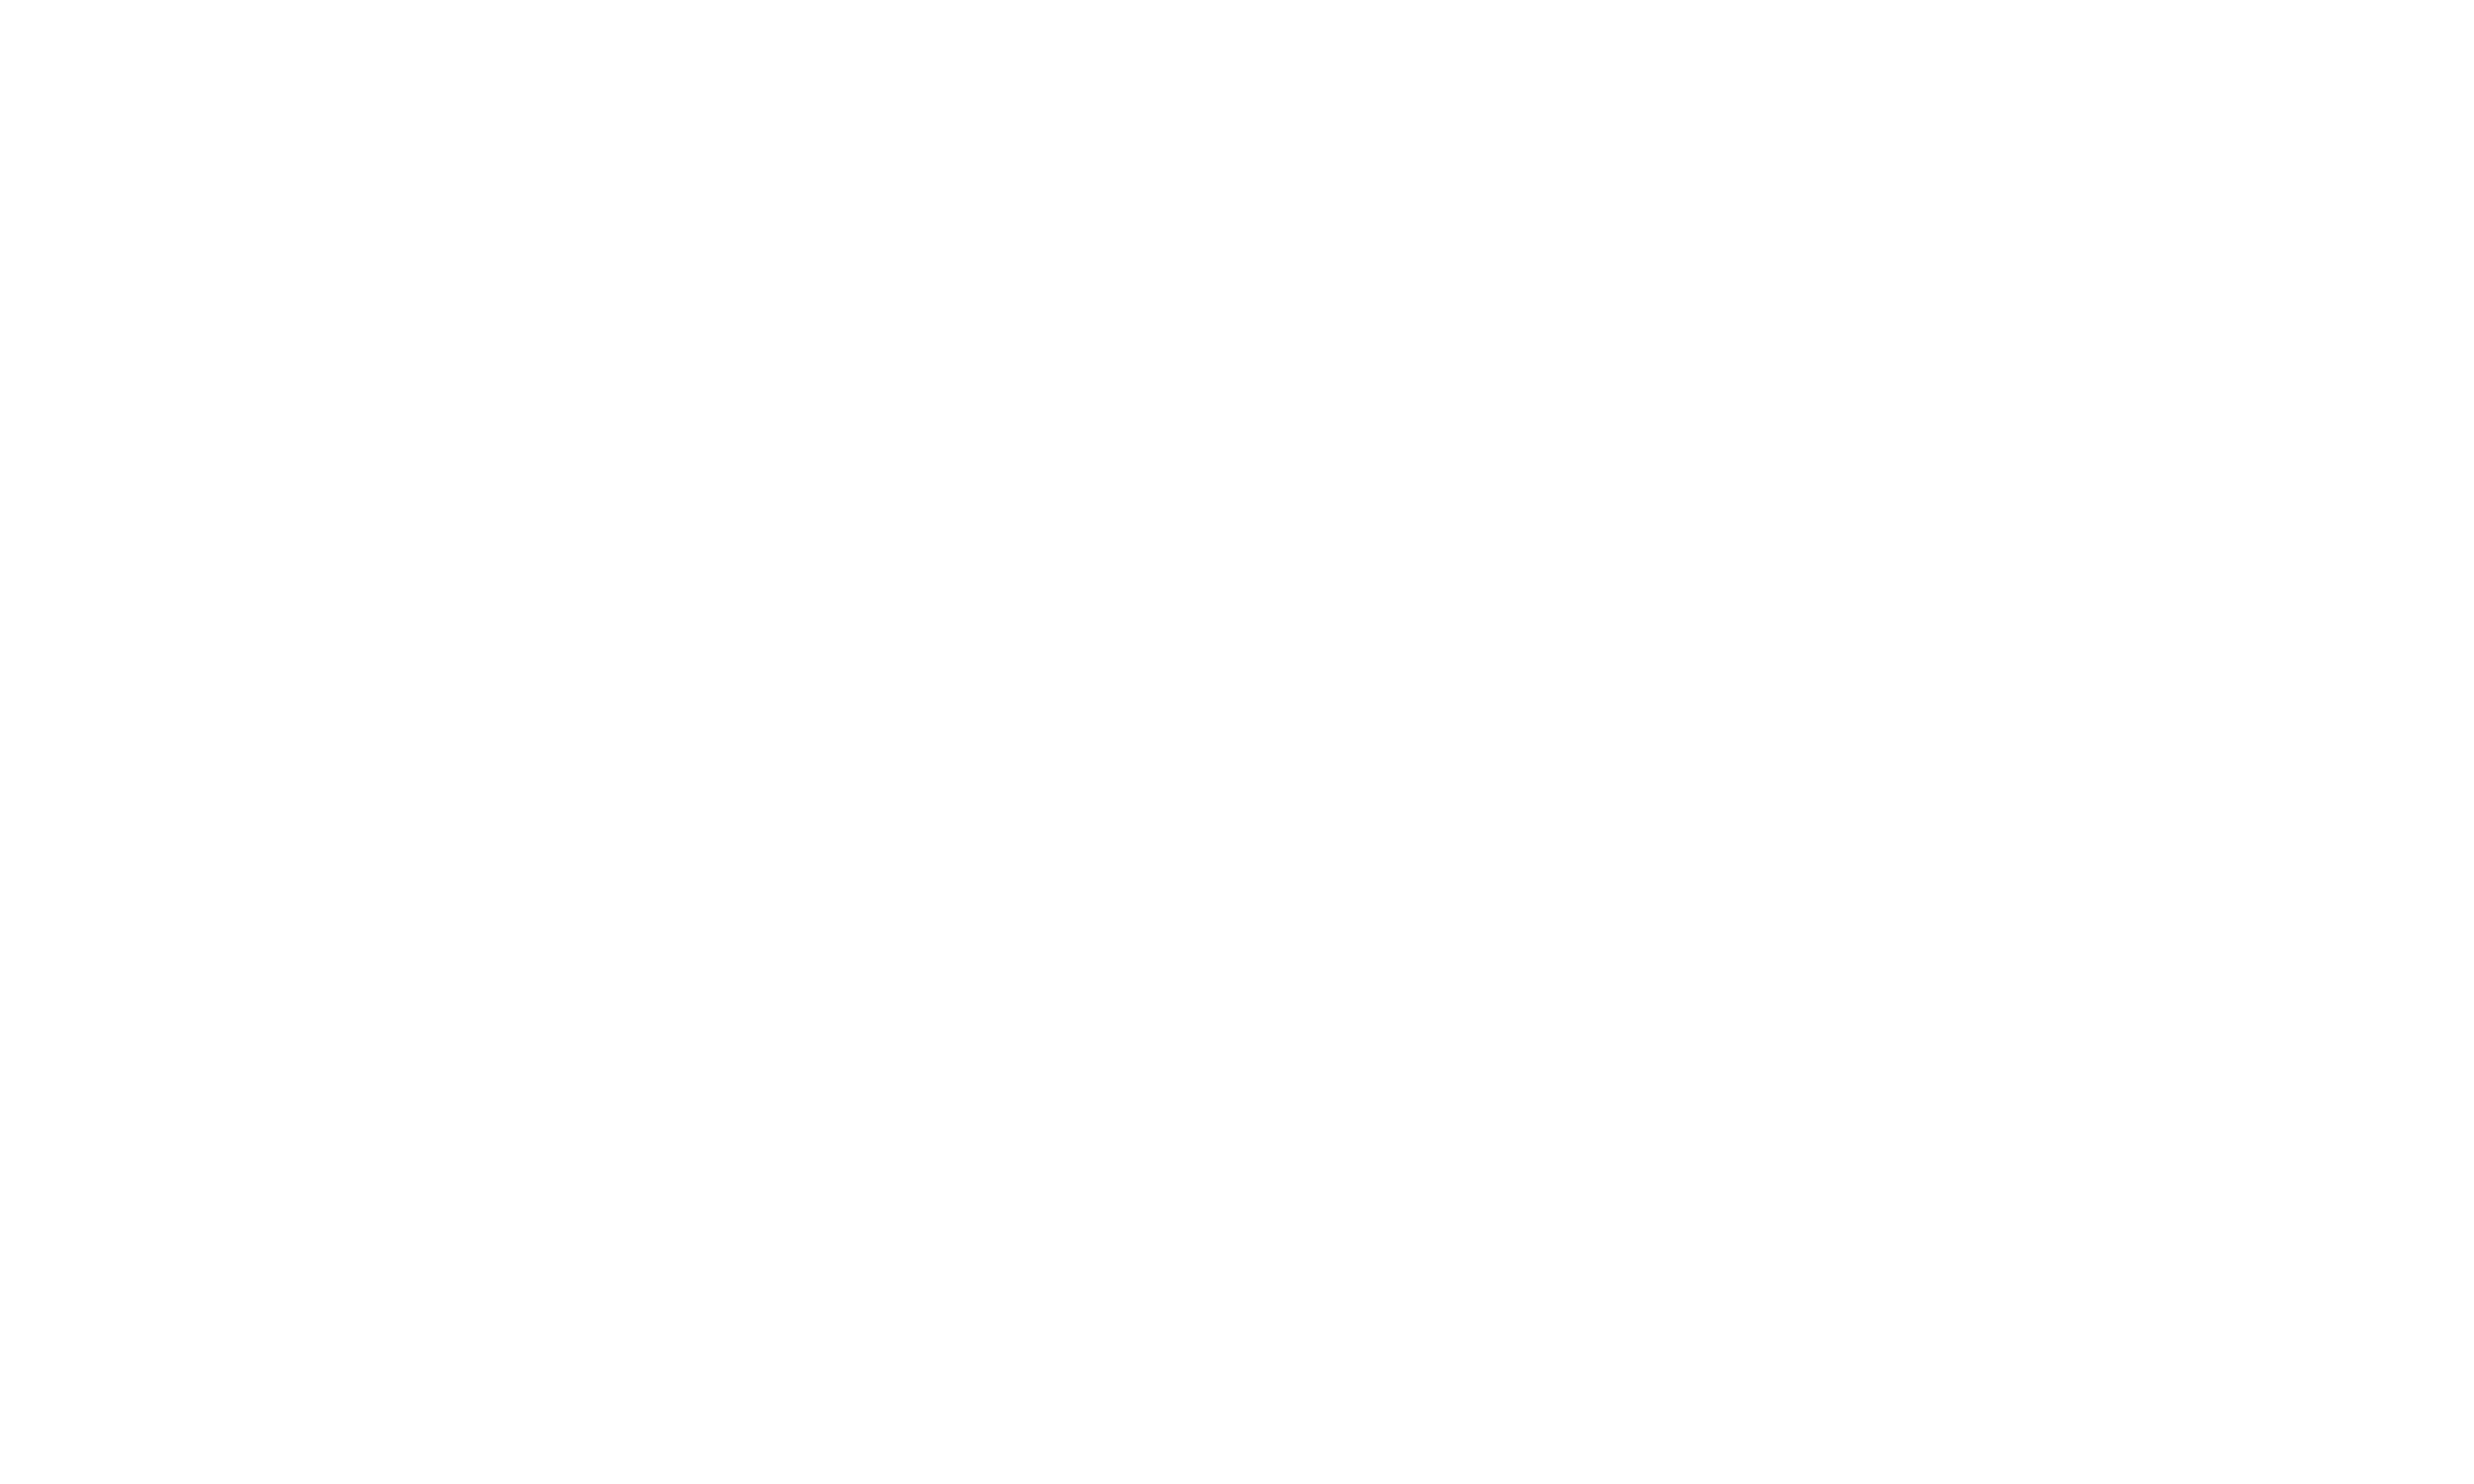 spans logo